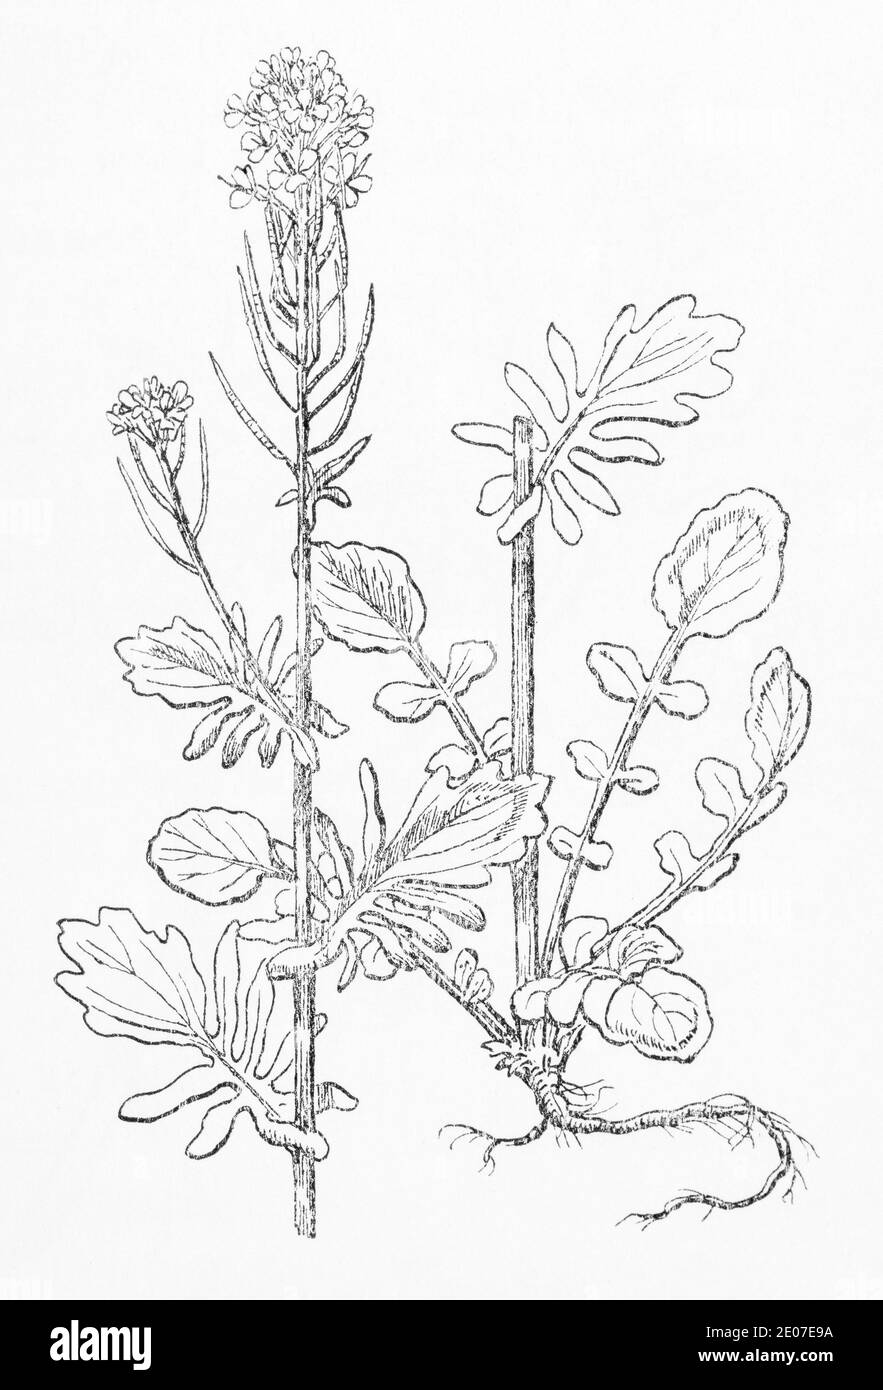 Old botanical illustration engraving of Winter-Cress / Garden Yellow Rocket / Barbarea vulgaris. Traditional medicinal herbal plant. See Notes Stock Photo